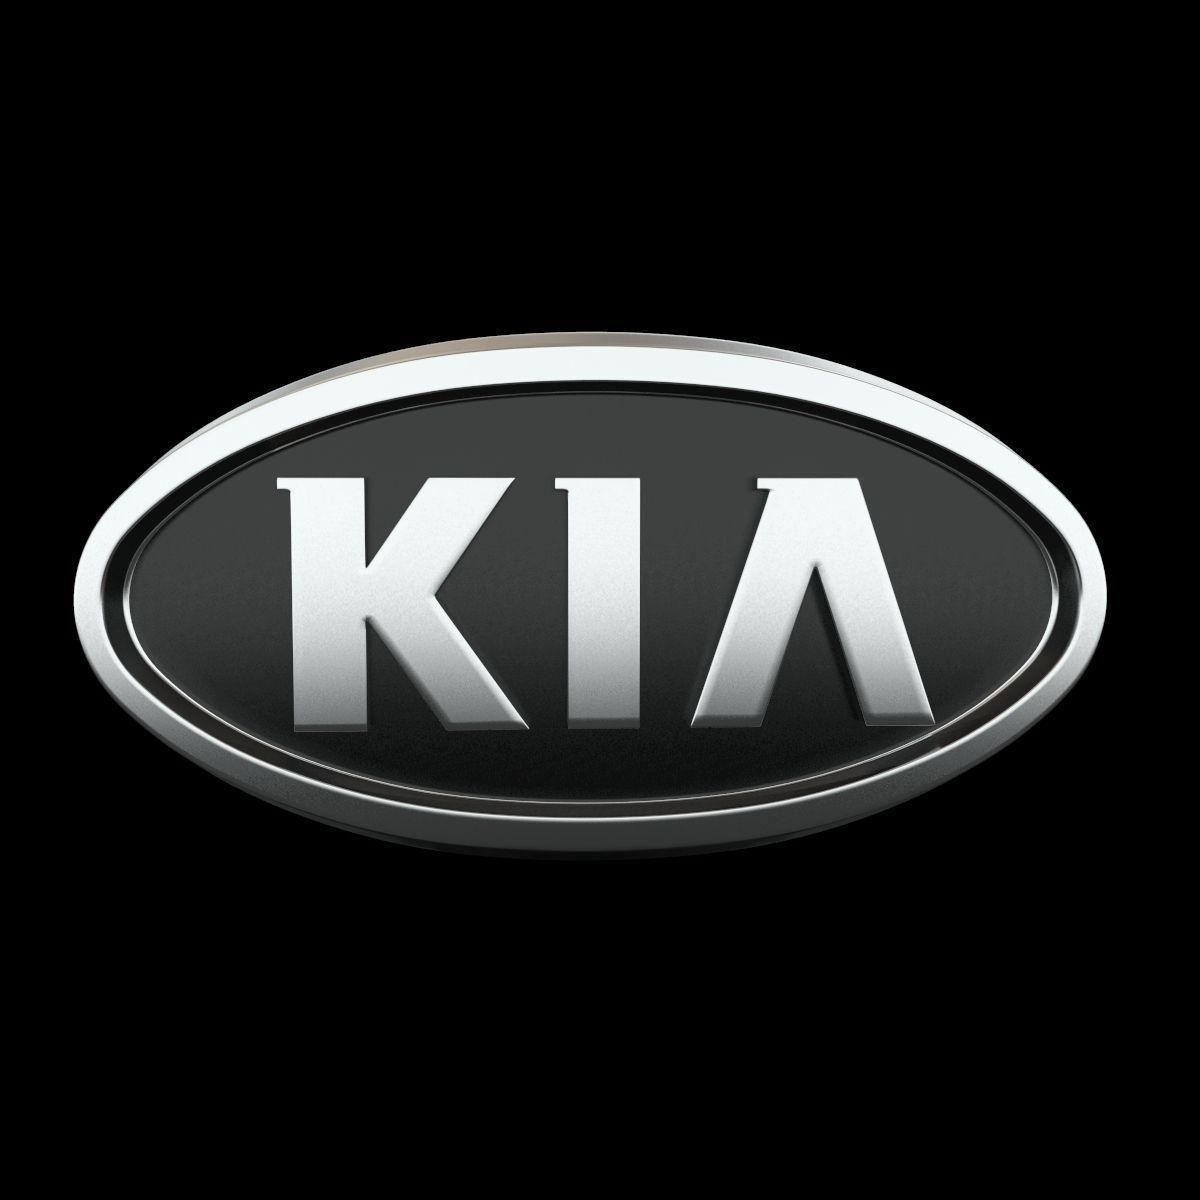 Kia Logo - Kia Logo, Kia Car Symbol Meaning and History | Car Brand Names.com